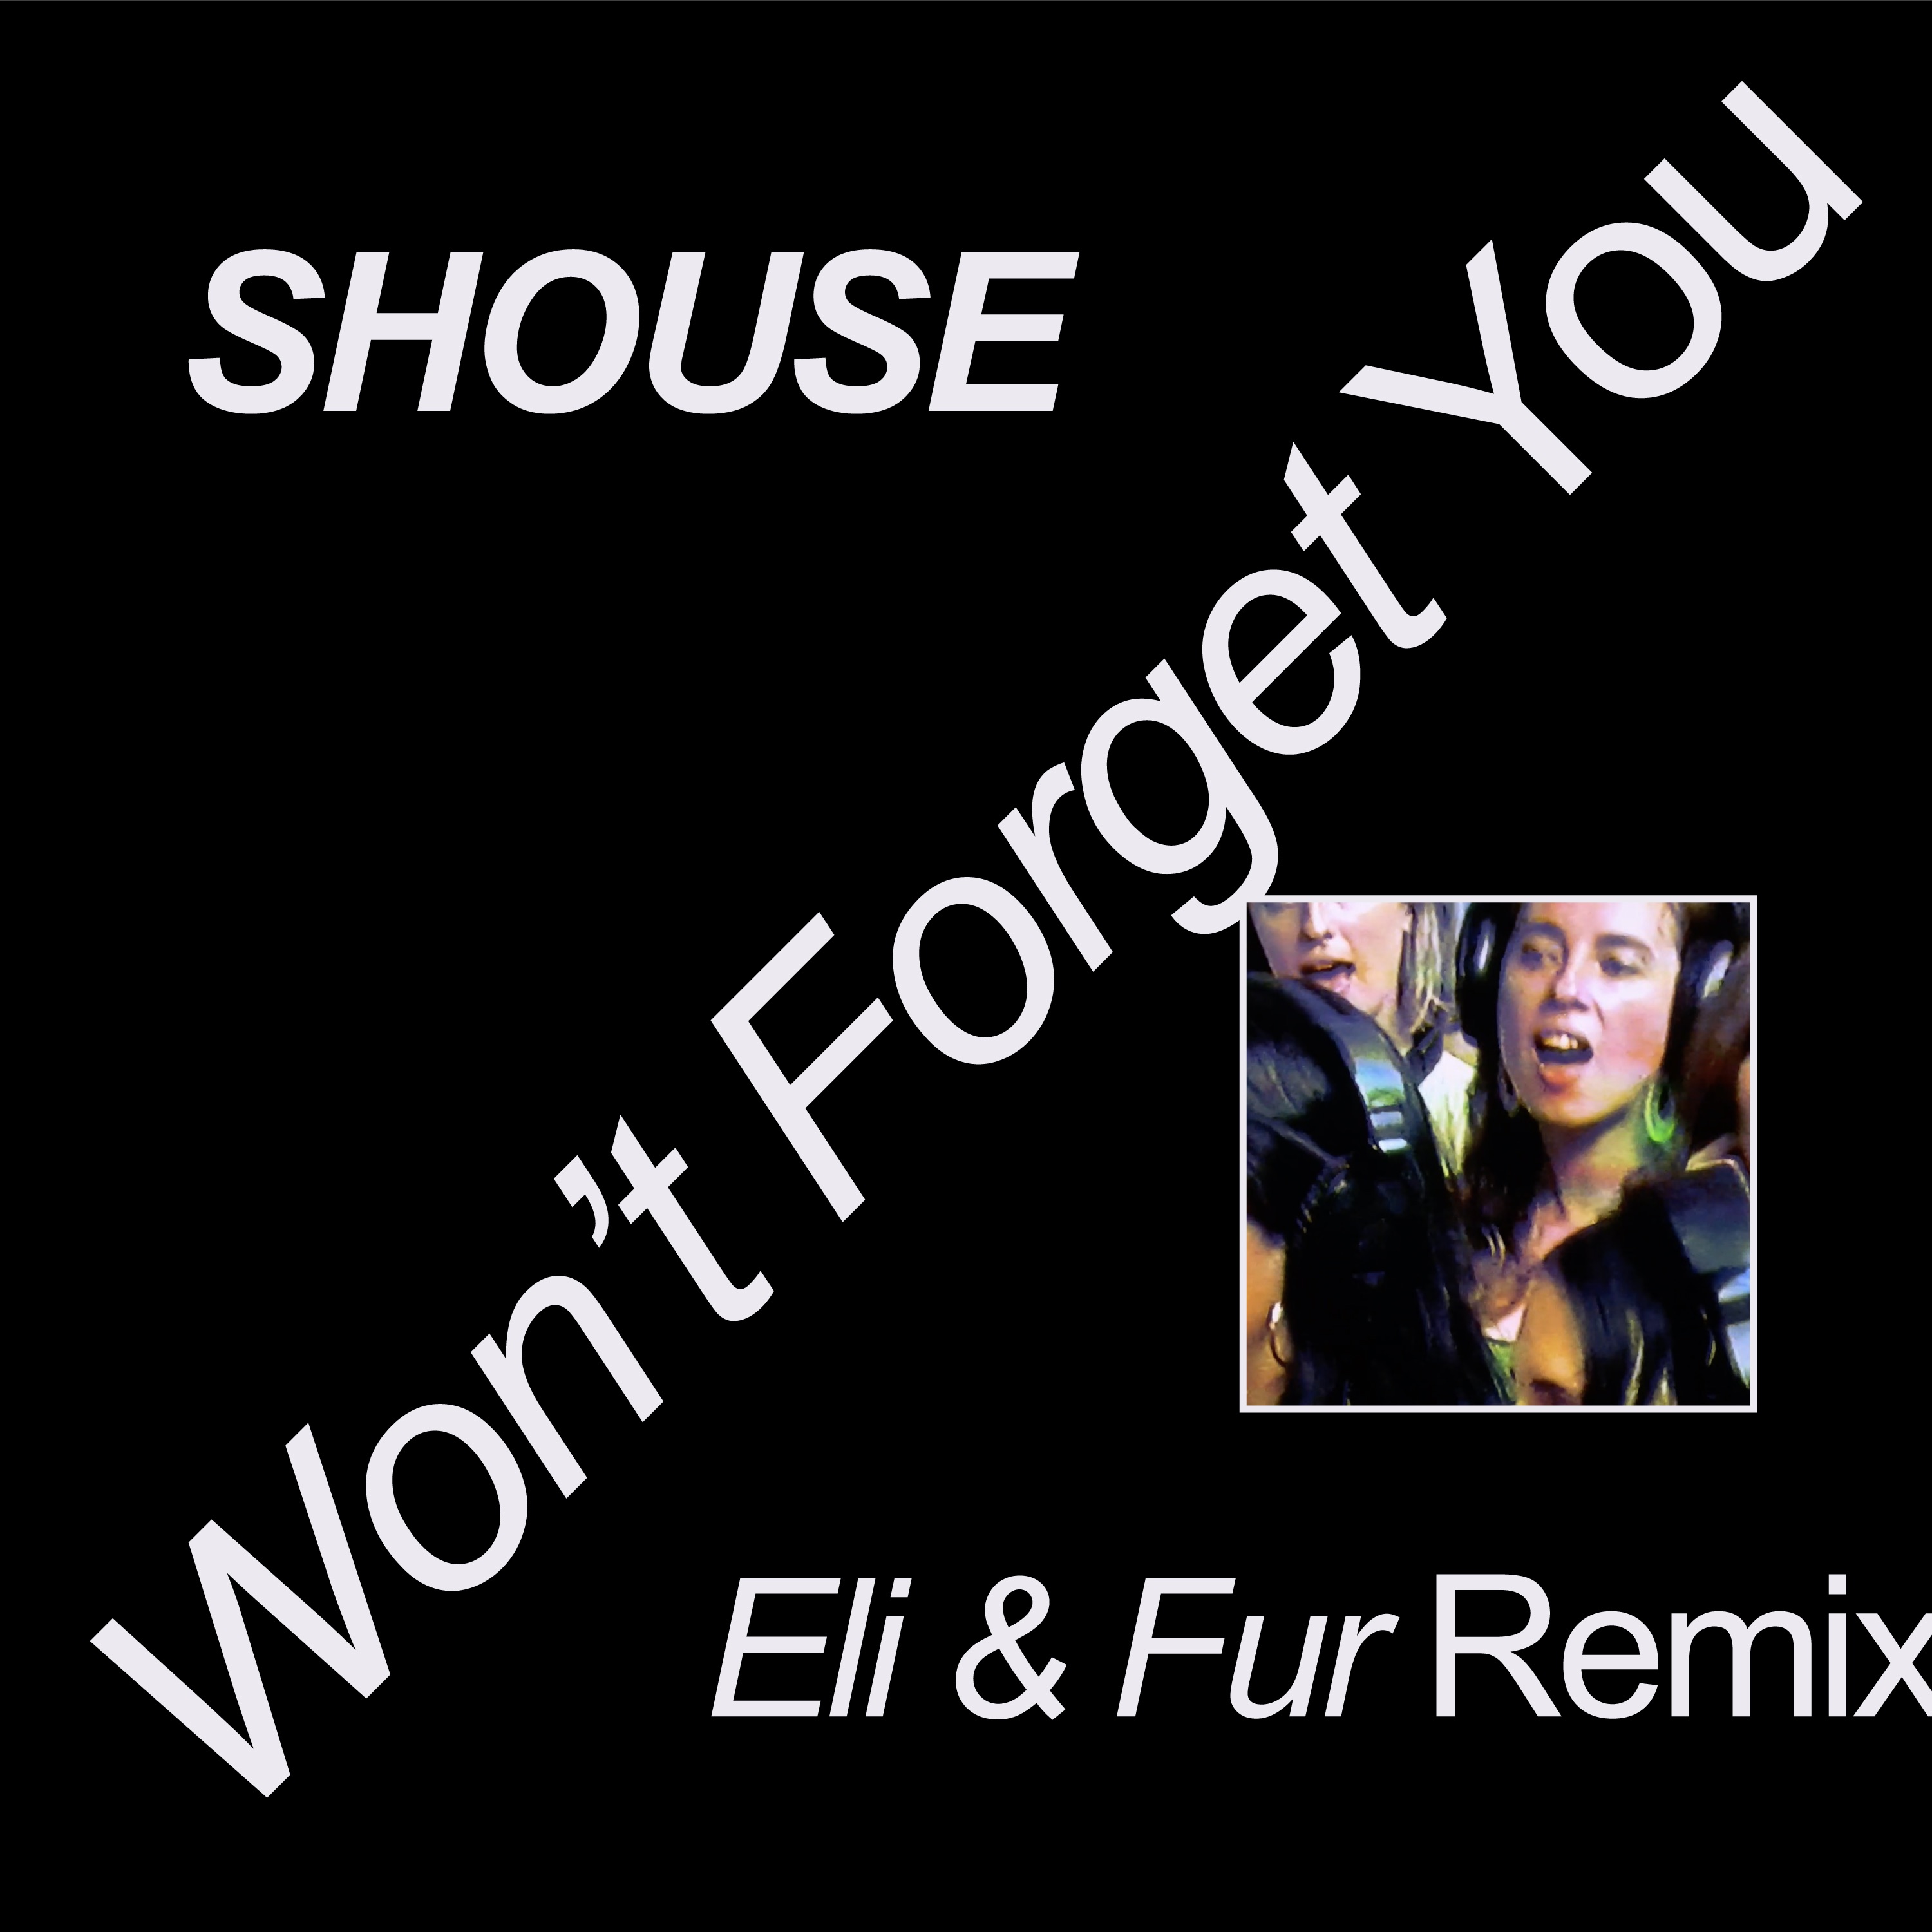 Aflaai Shouse - Won't Forget You (Eli & Fur Remix)